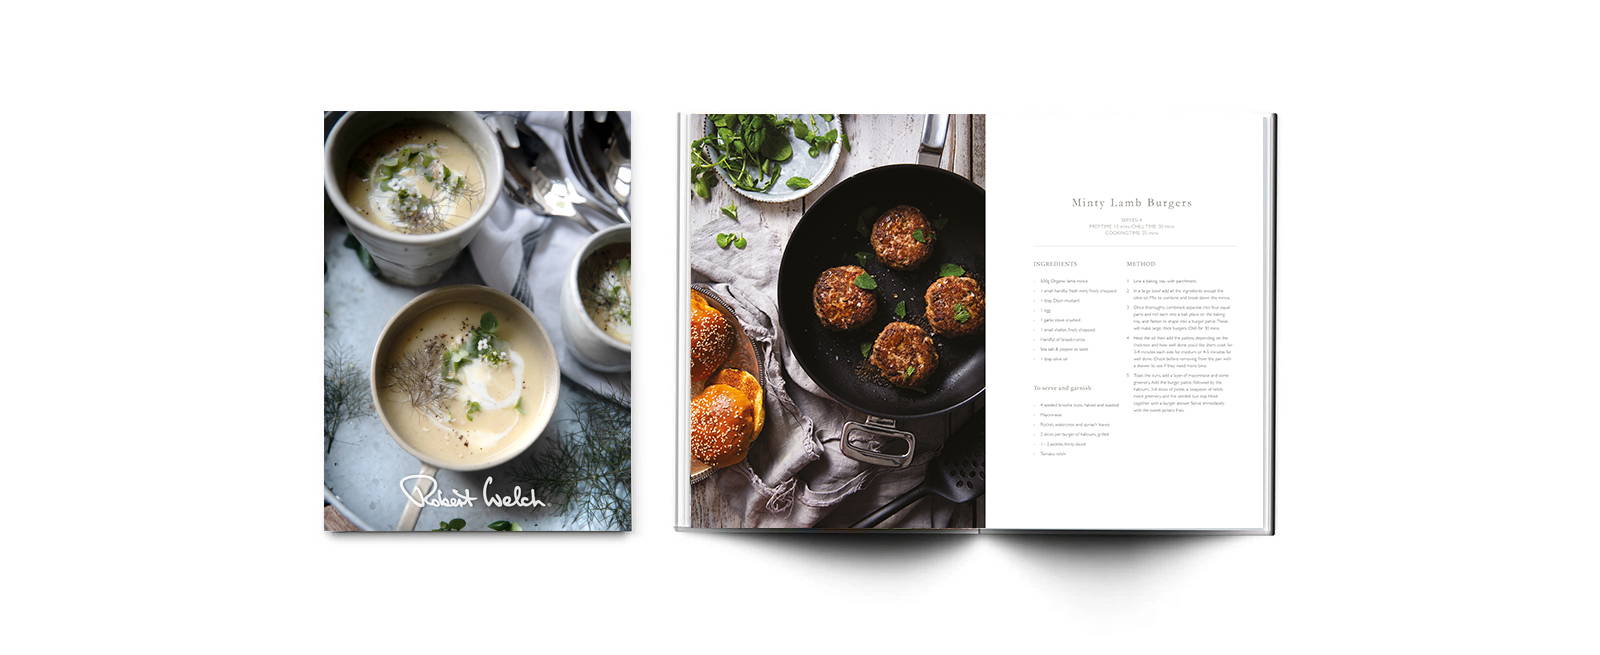 The Robert Welch recipe cookbook